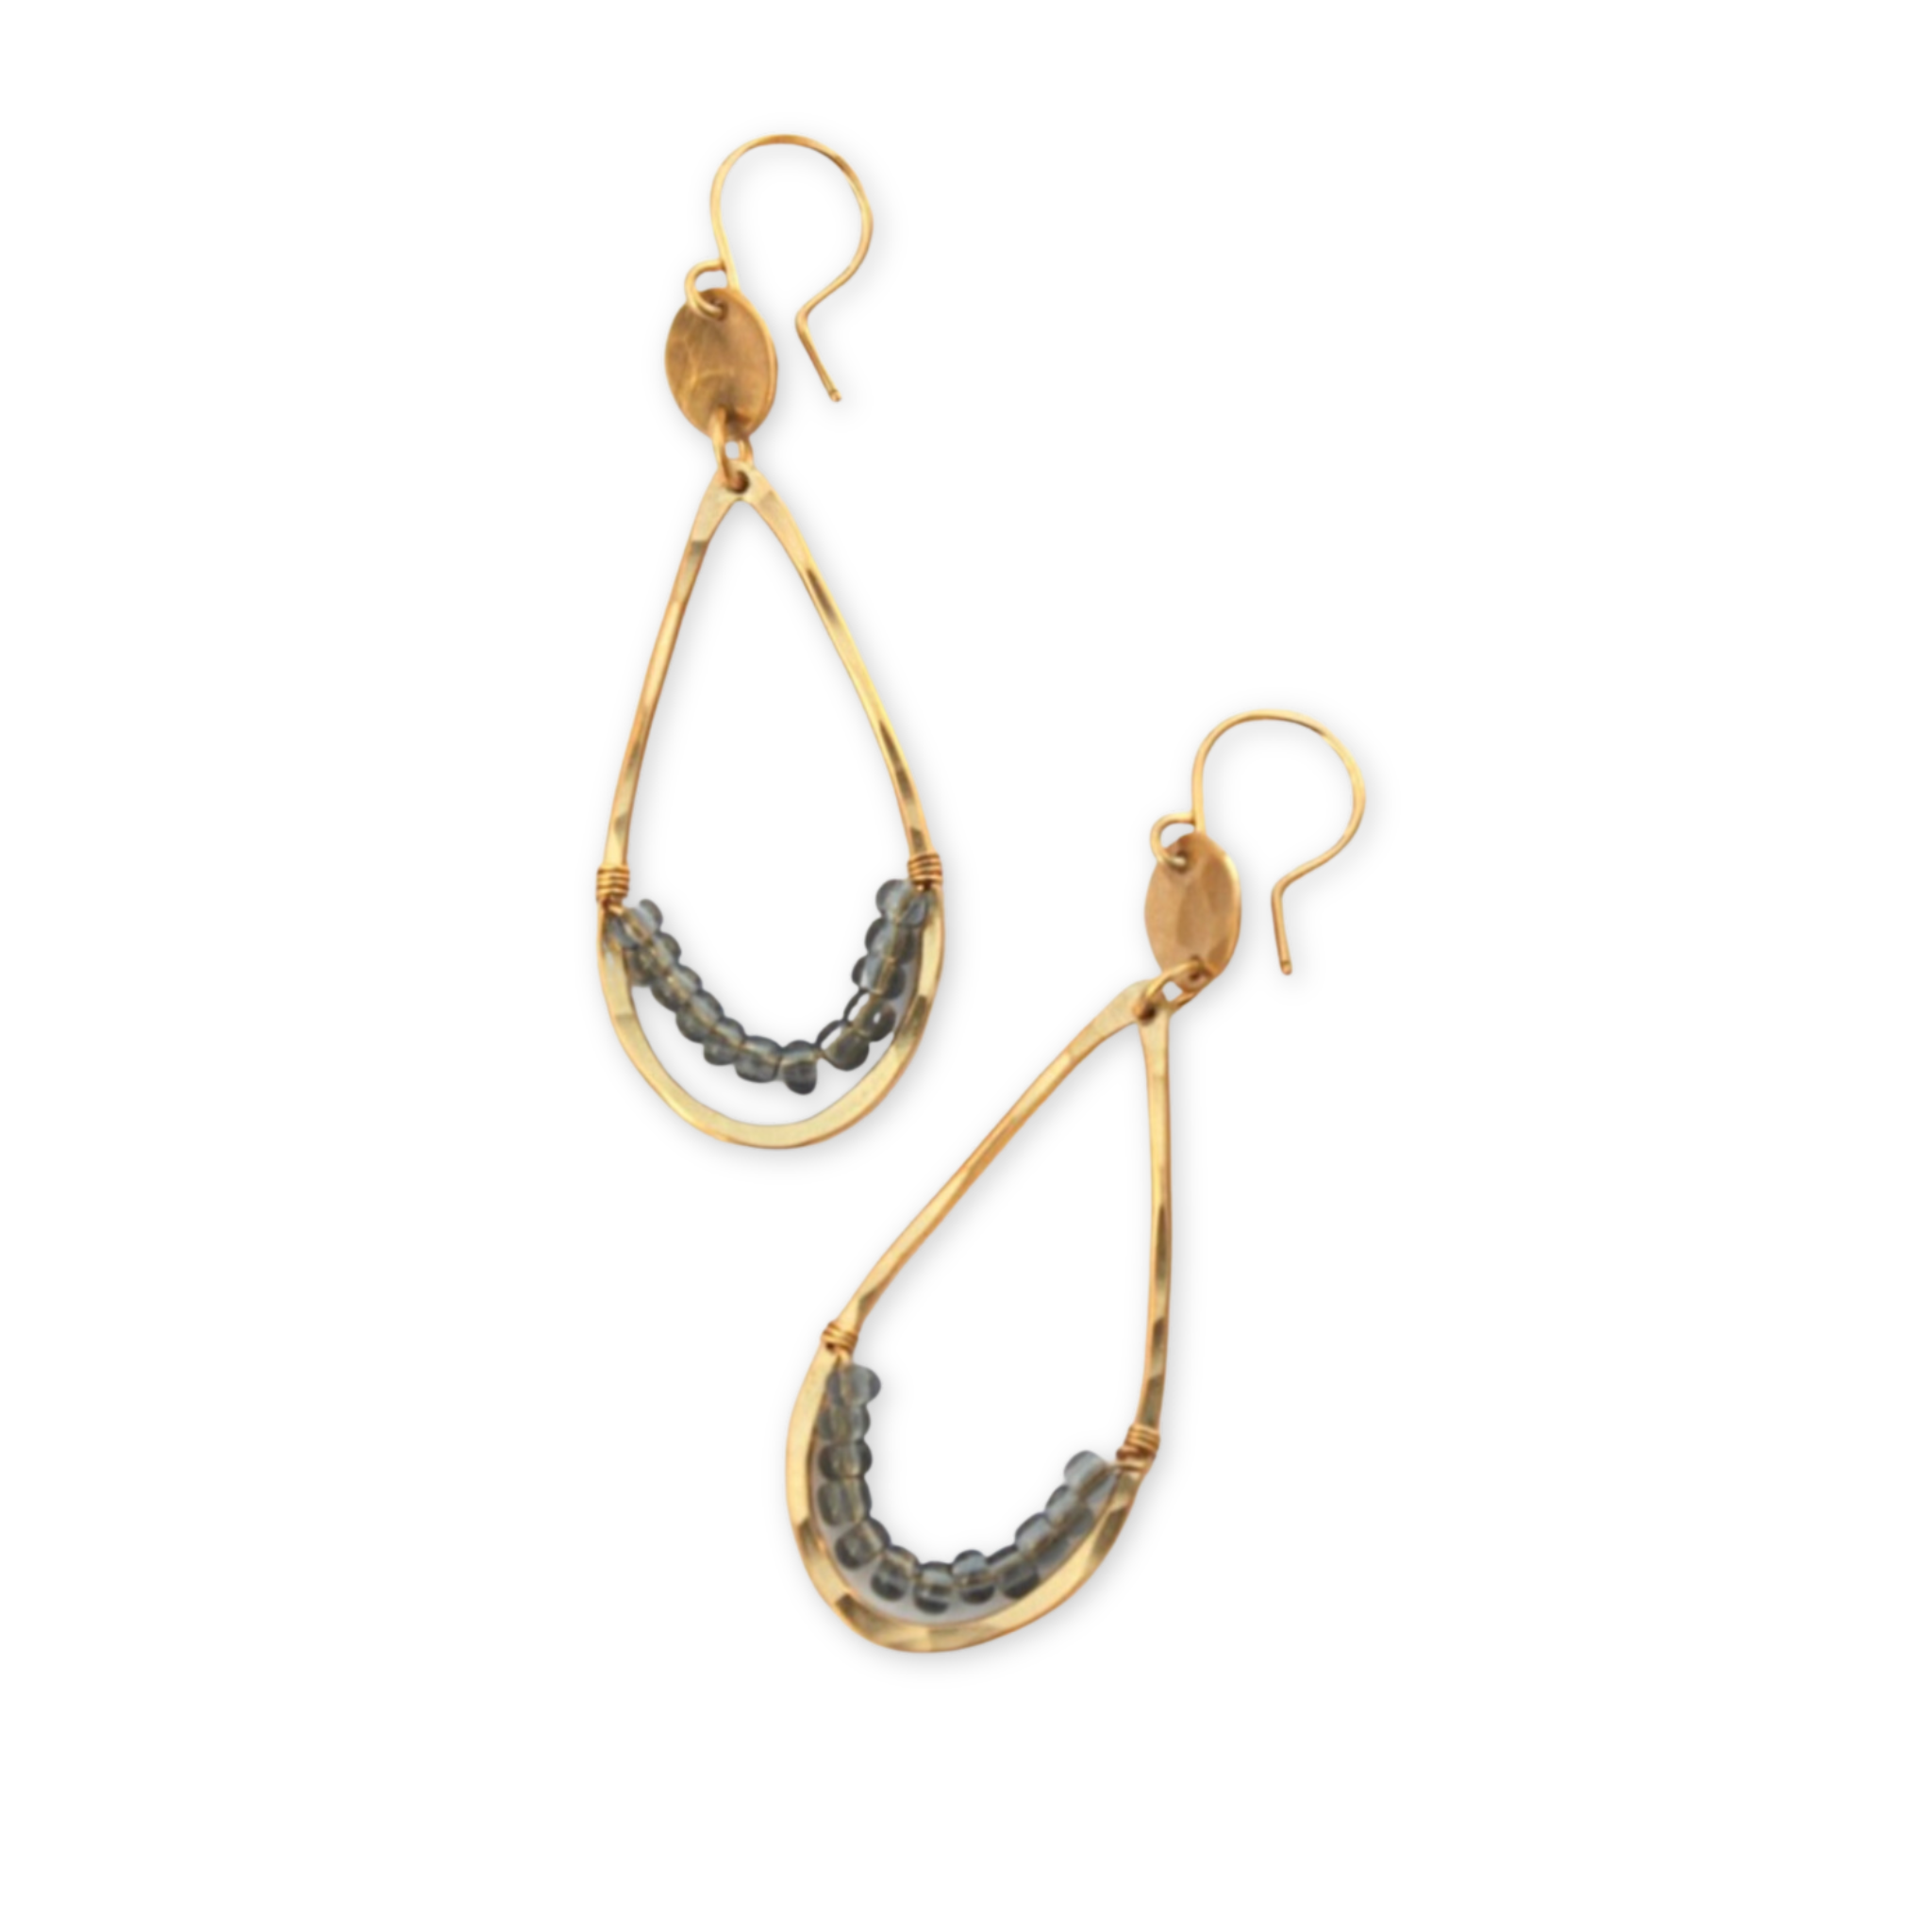 hand forged teardrop shaped earrings with Czech glass beads